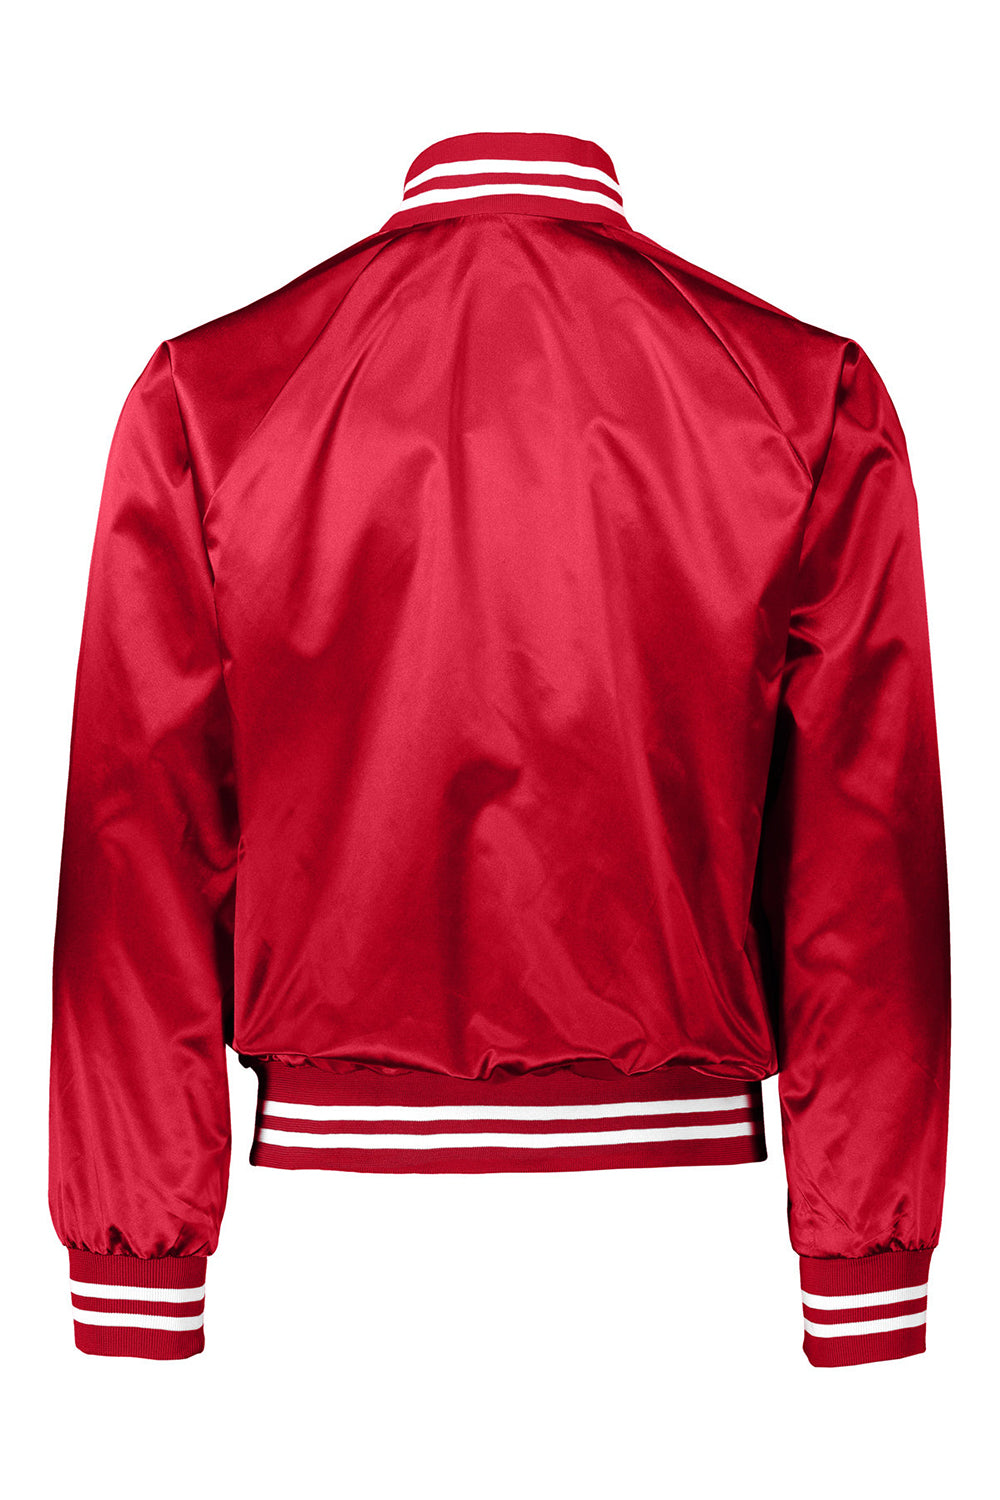 Augusta Sportswear 3610 Mens Snap Front Satin Baseball Jacket w/ Striped Trim Red/White Flat Back